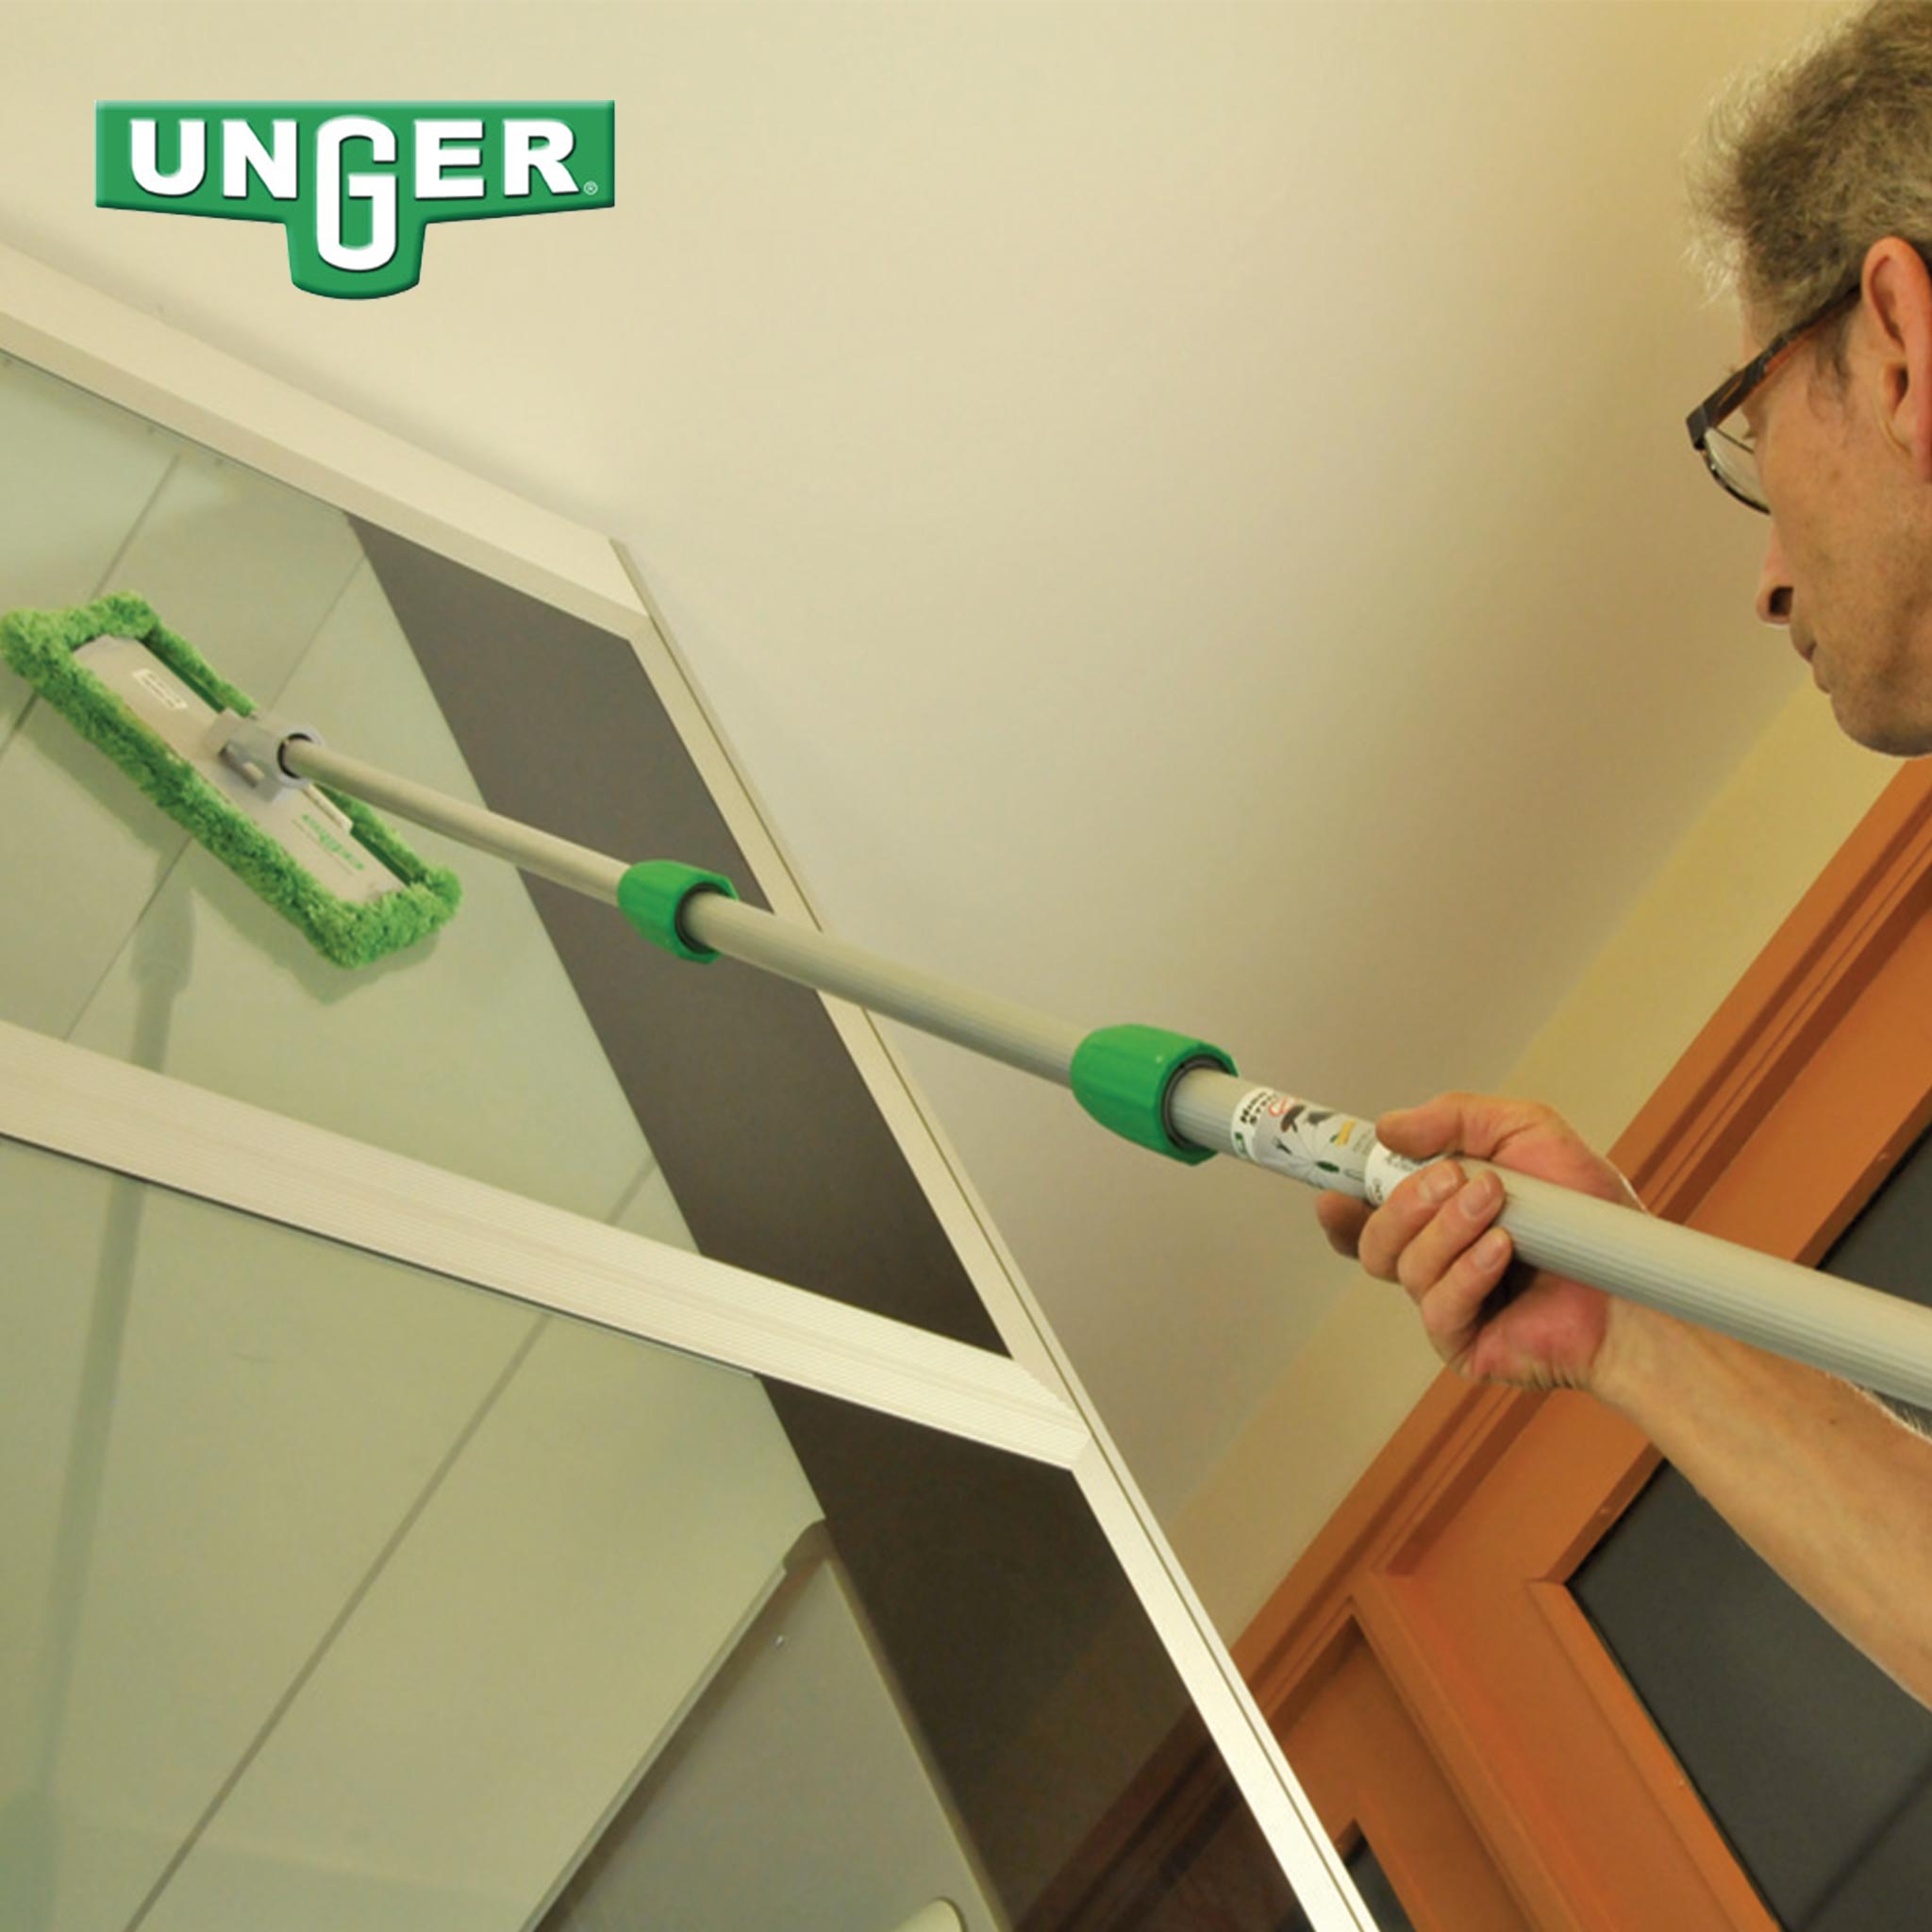 Unger Free Range Interior Glass Cleaning Kit